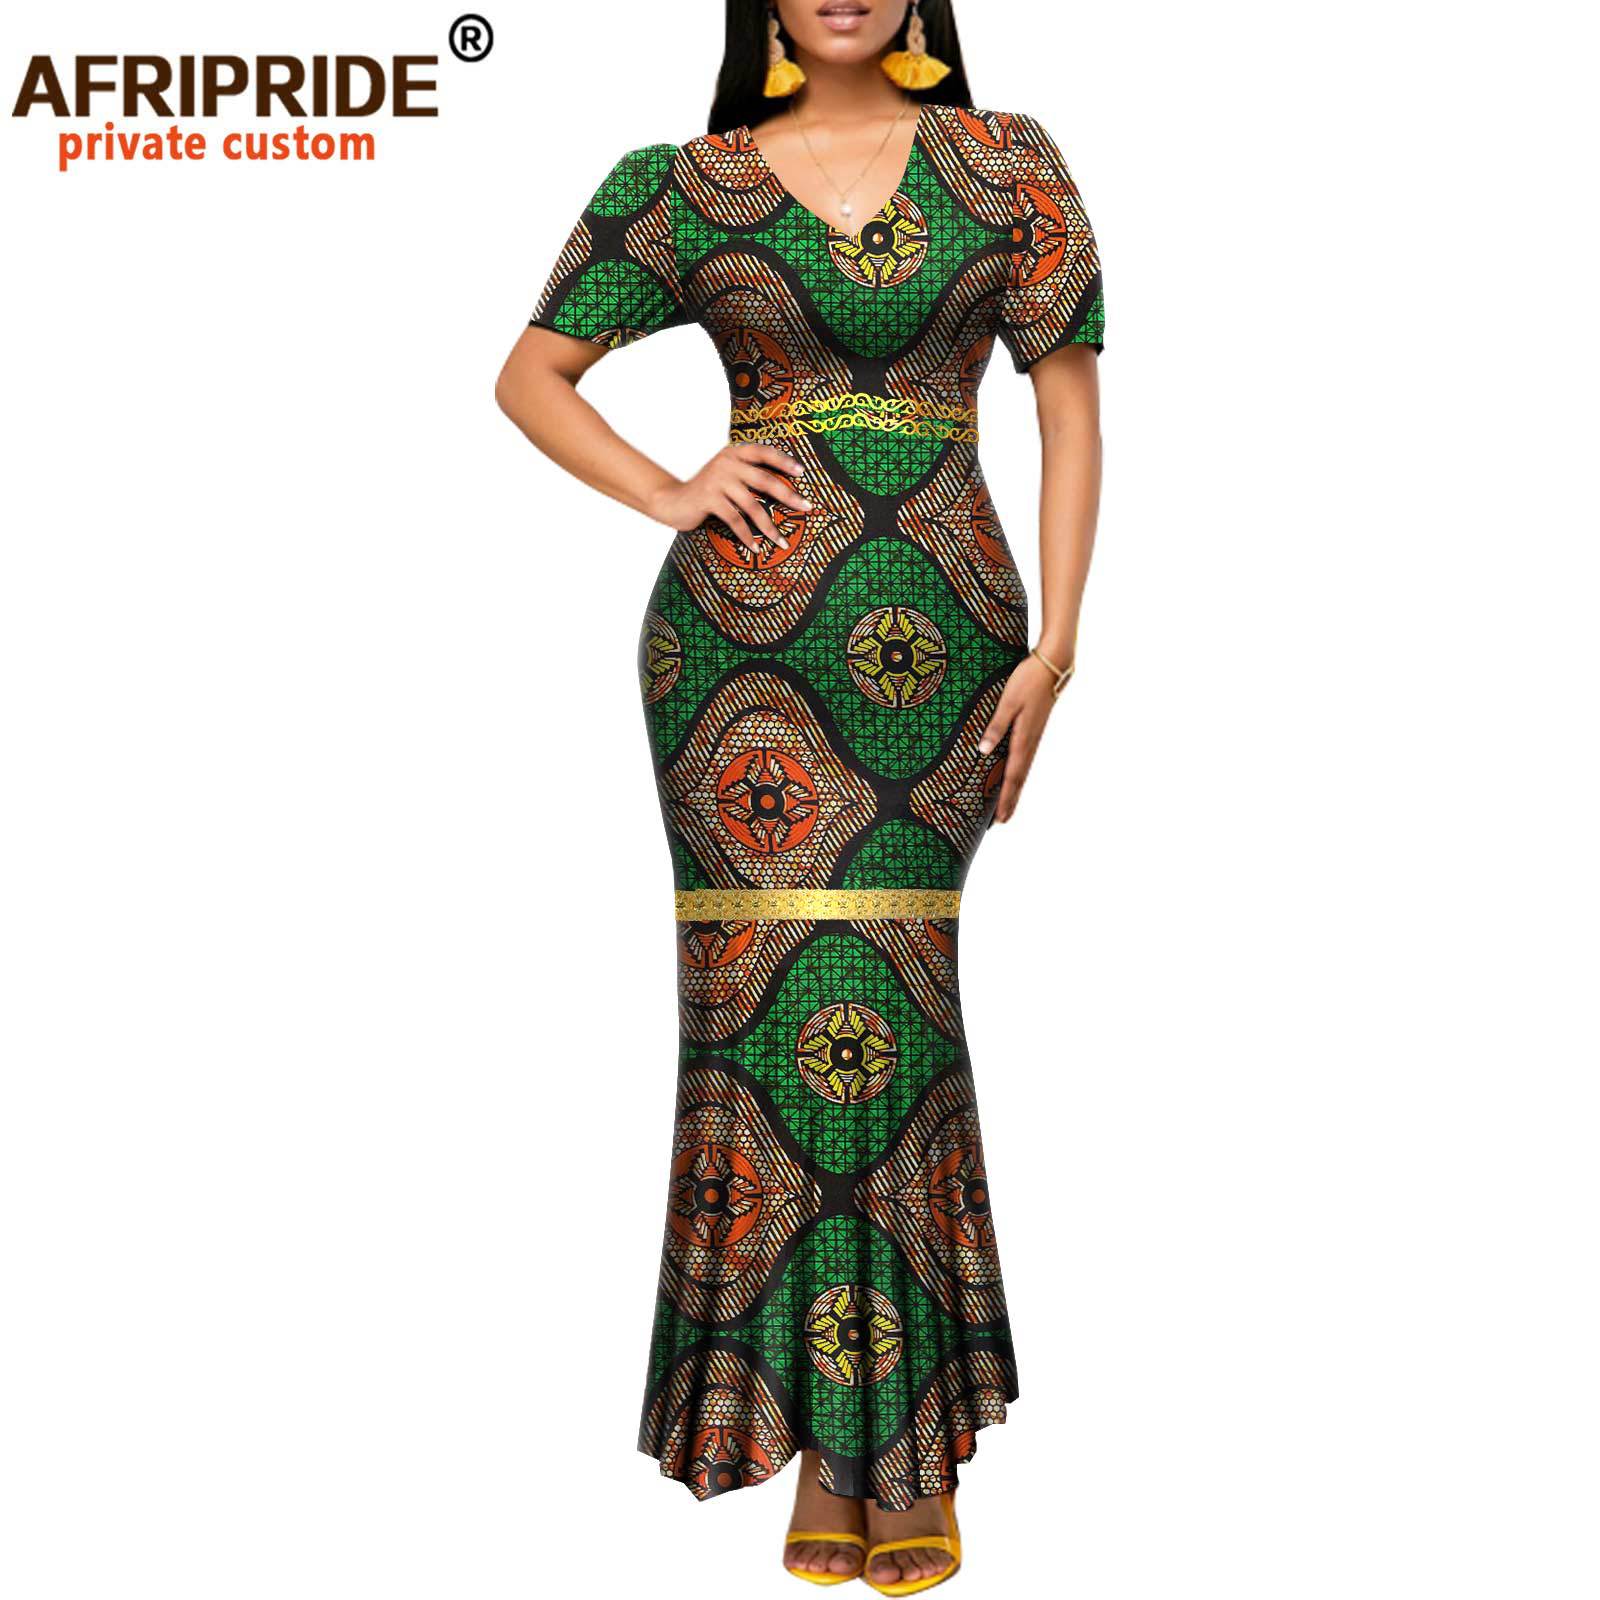 Foreign Trade Africa Duplex Printing Cotton Batik Fashion Large Size Women's Dress Afripride 2125025